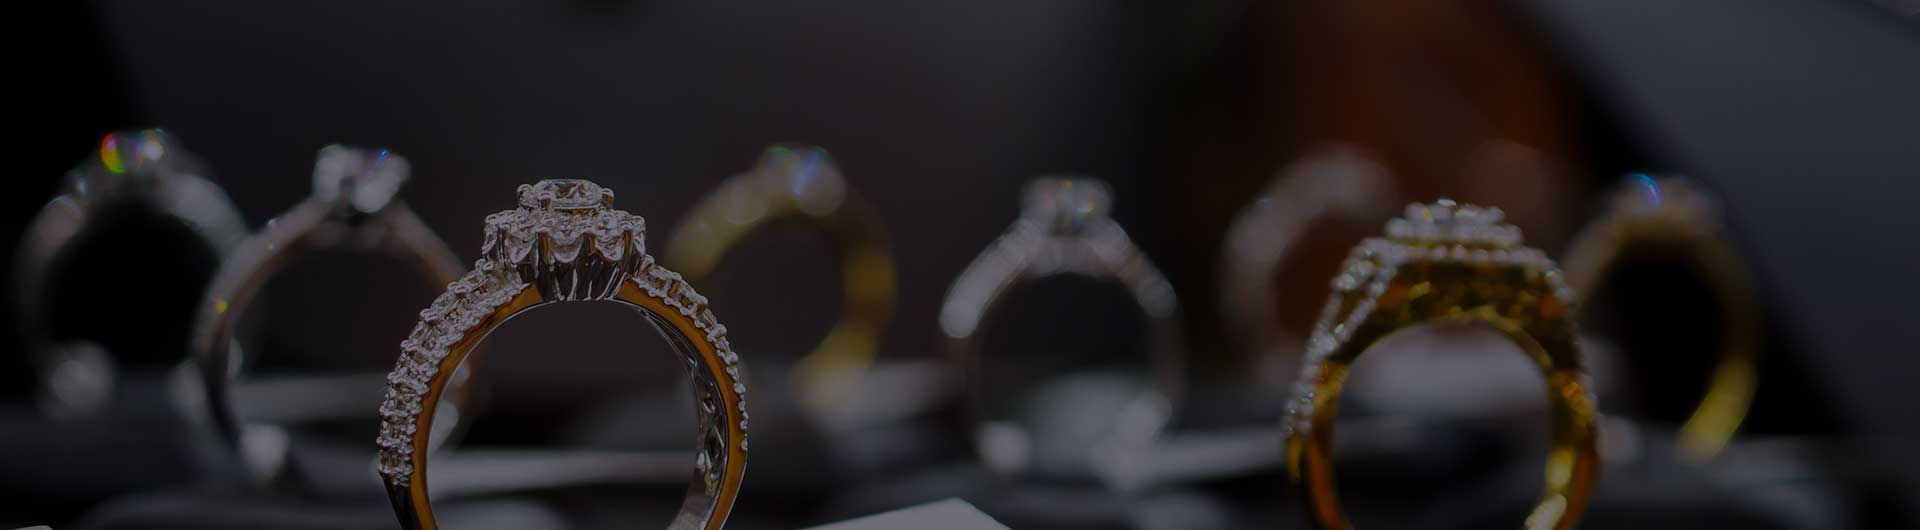 Diamond rings on display in a luxury retail store window.